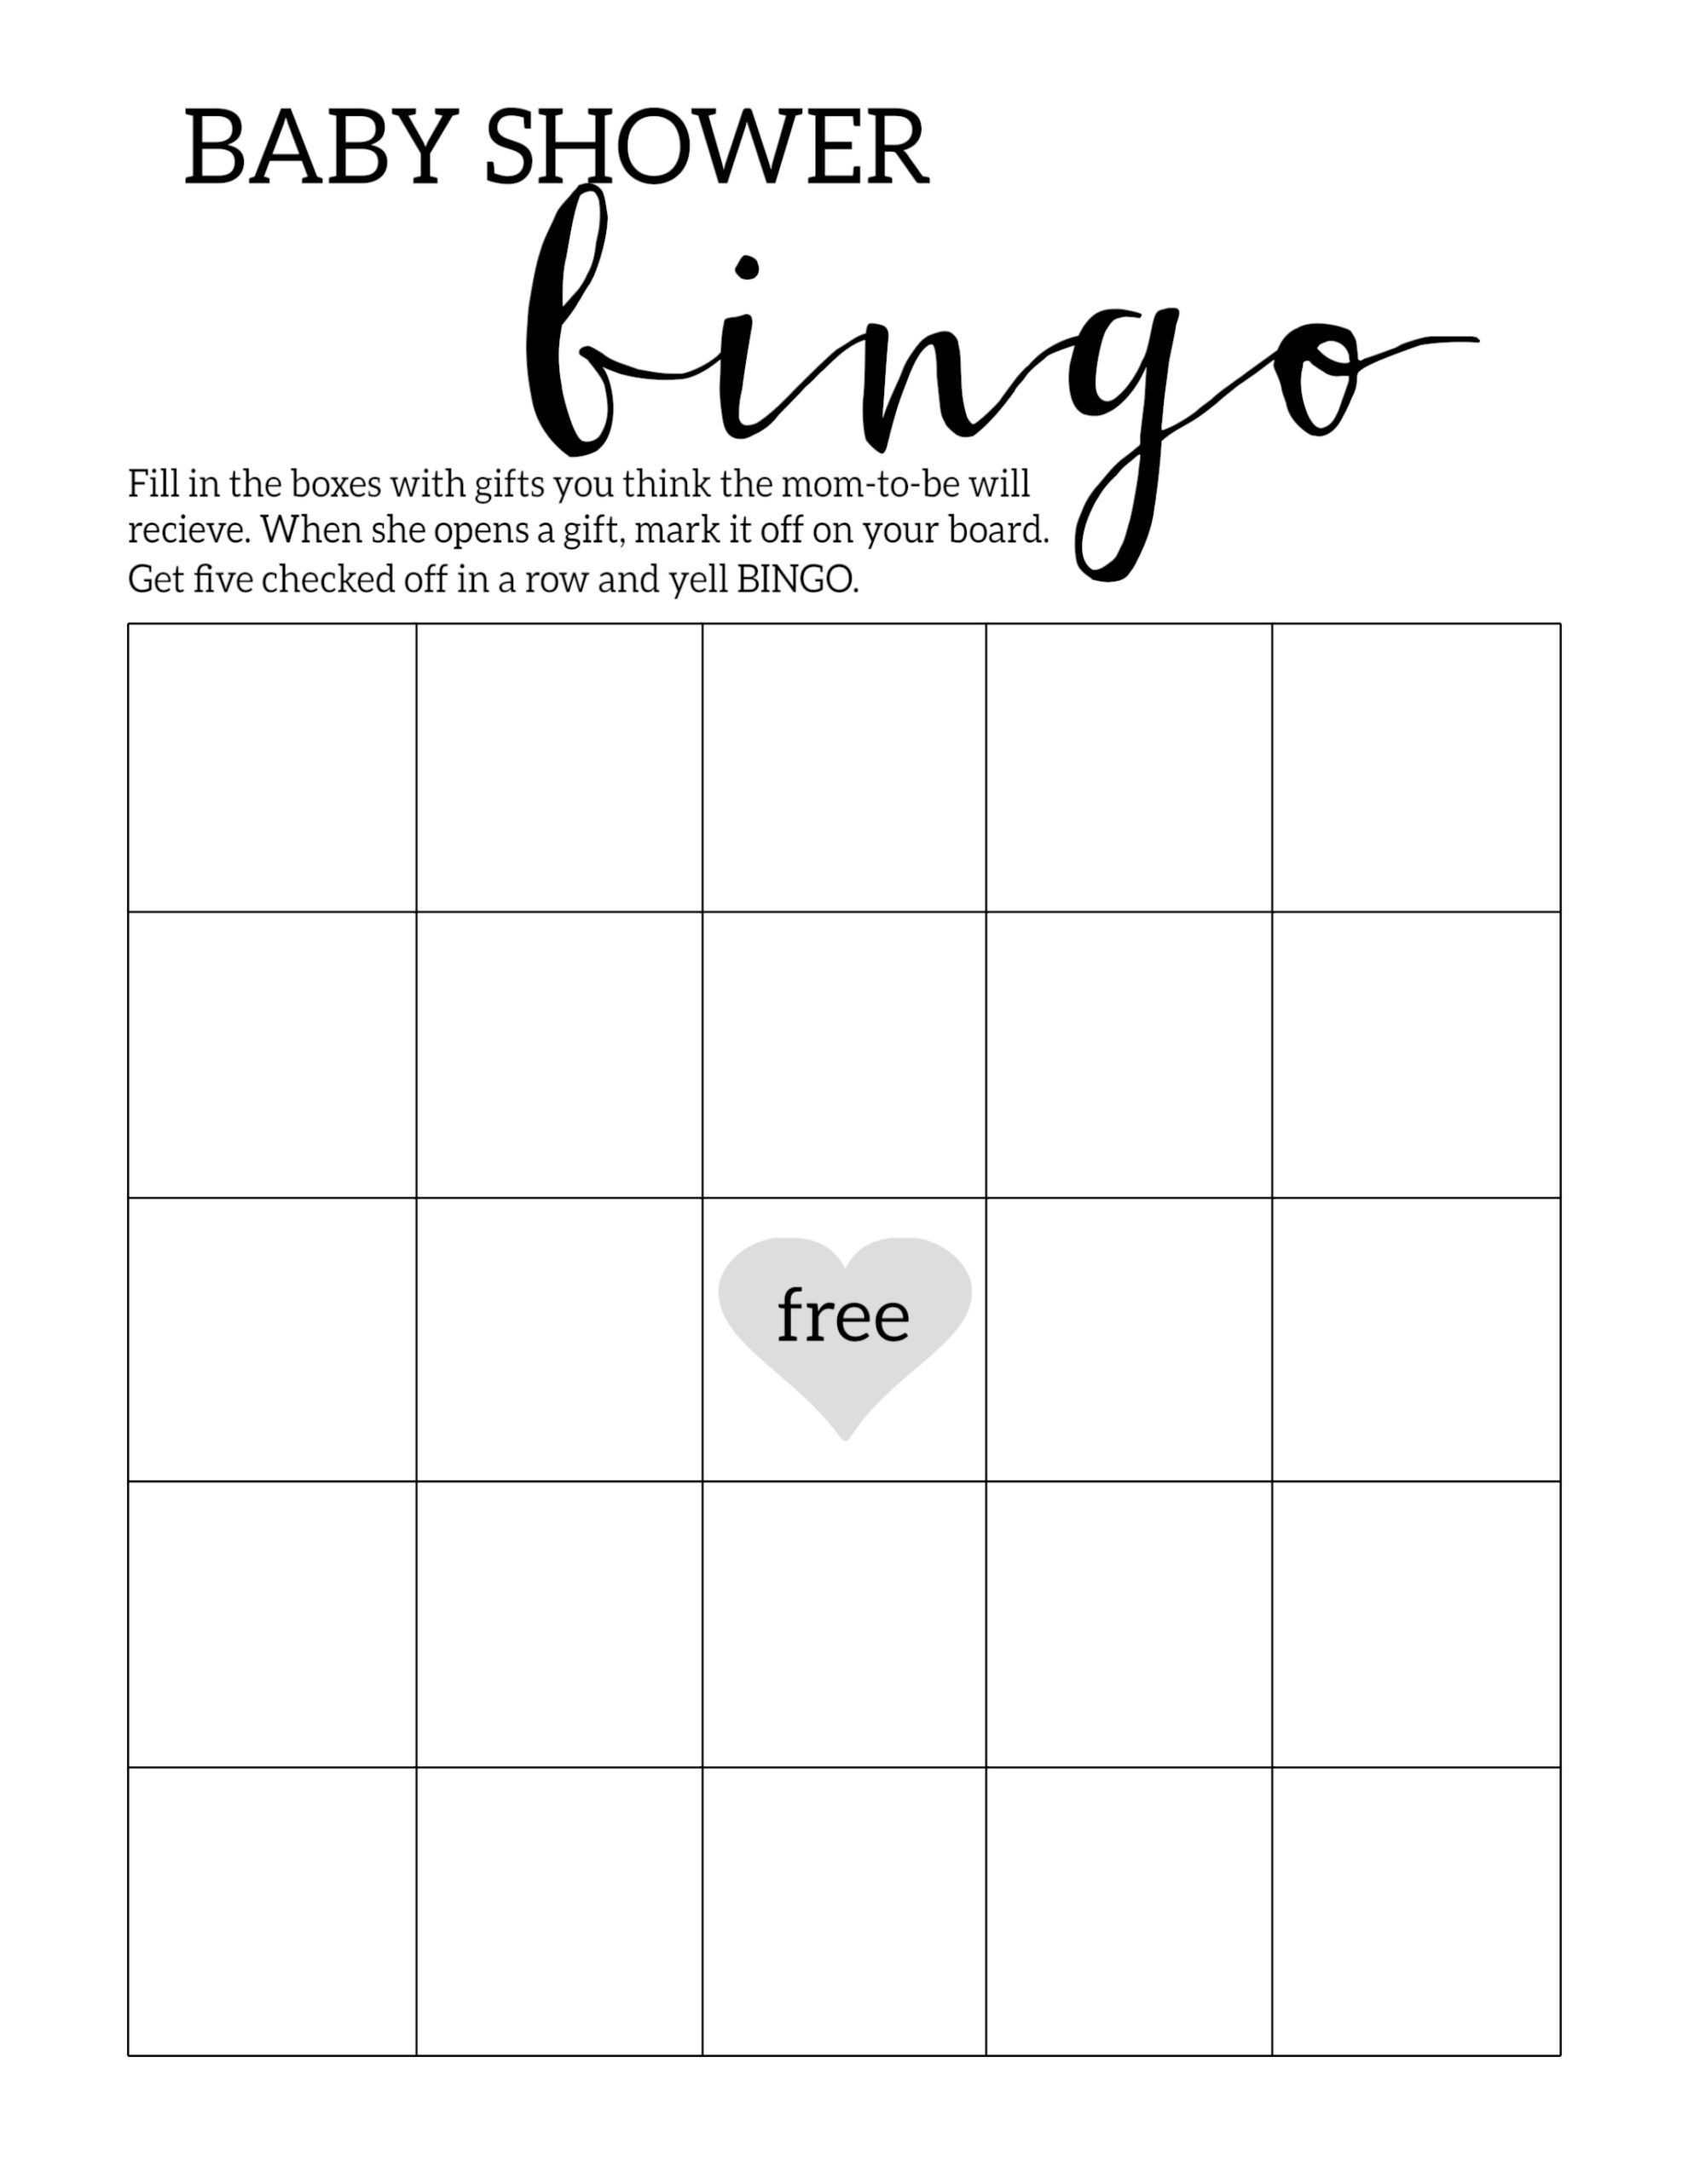 Baby Shower Bingo Printable Cards Template - Paper Trail Design - Baby Bingo Free Printable Template